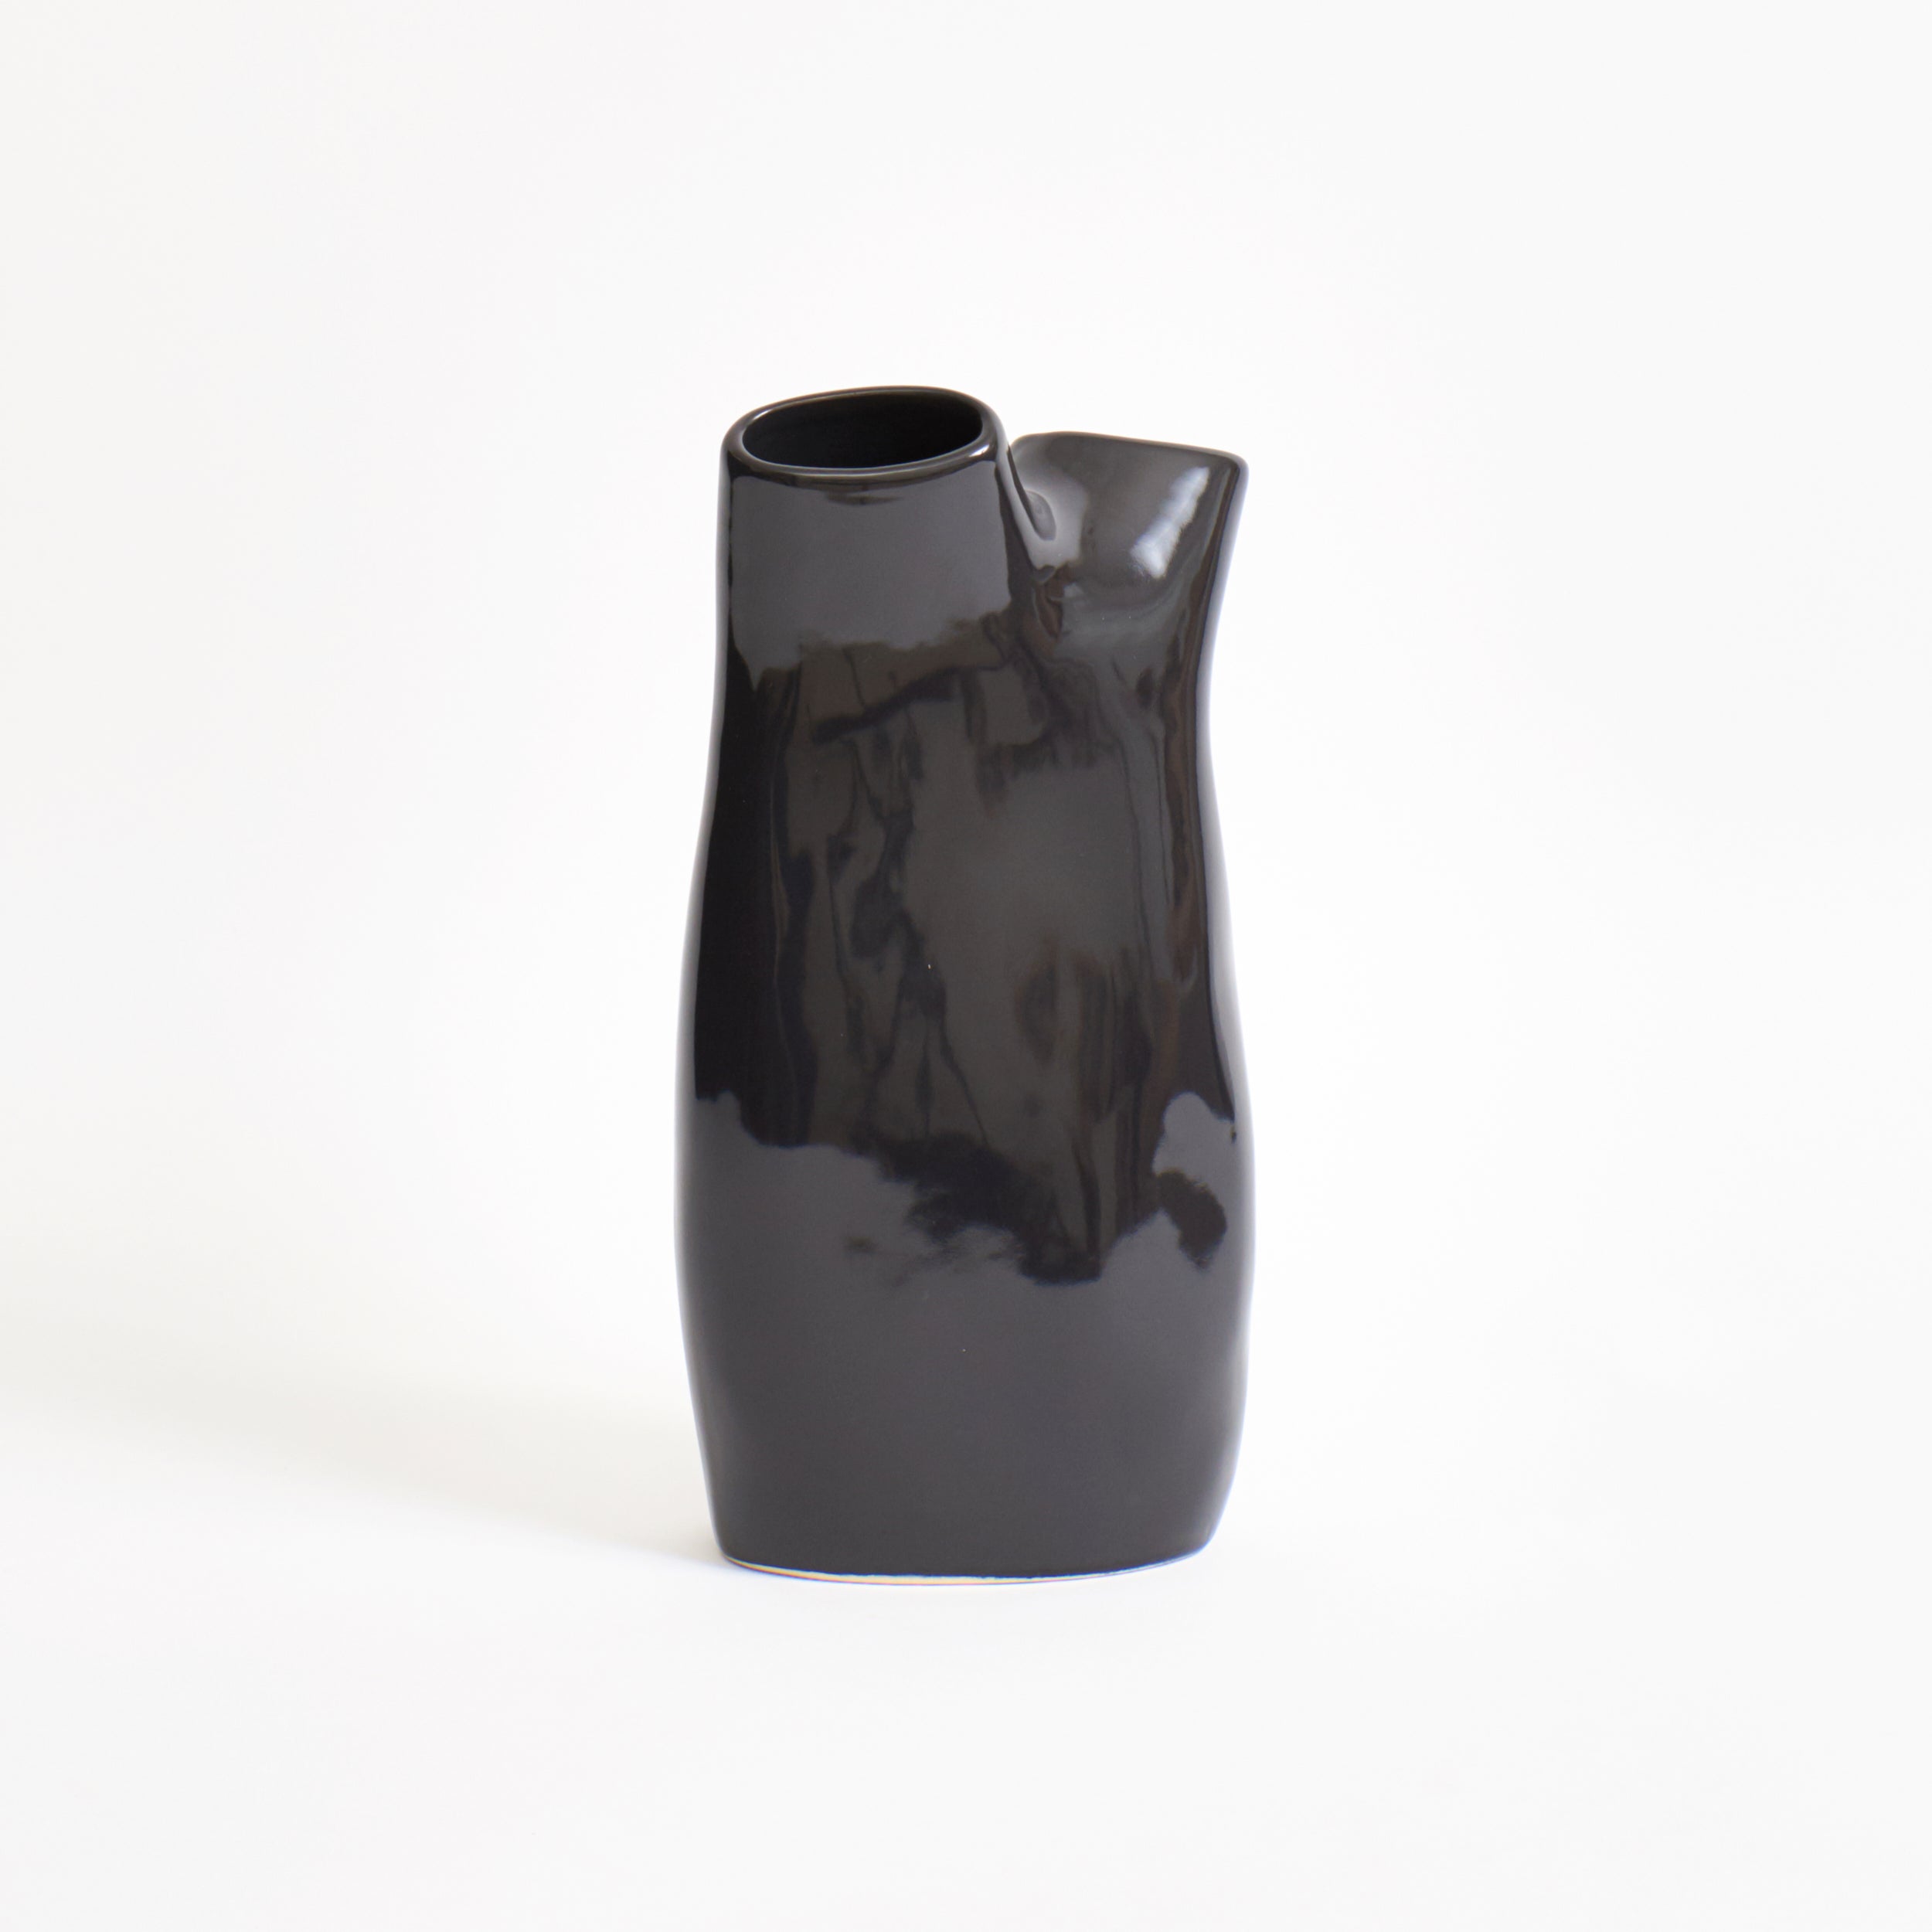 Gemini Vase – Project 213A